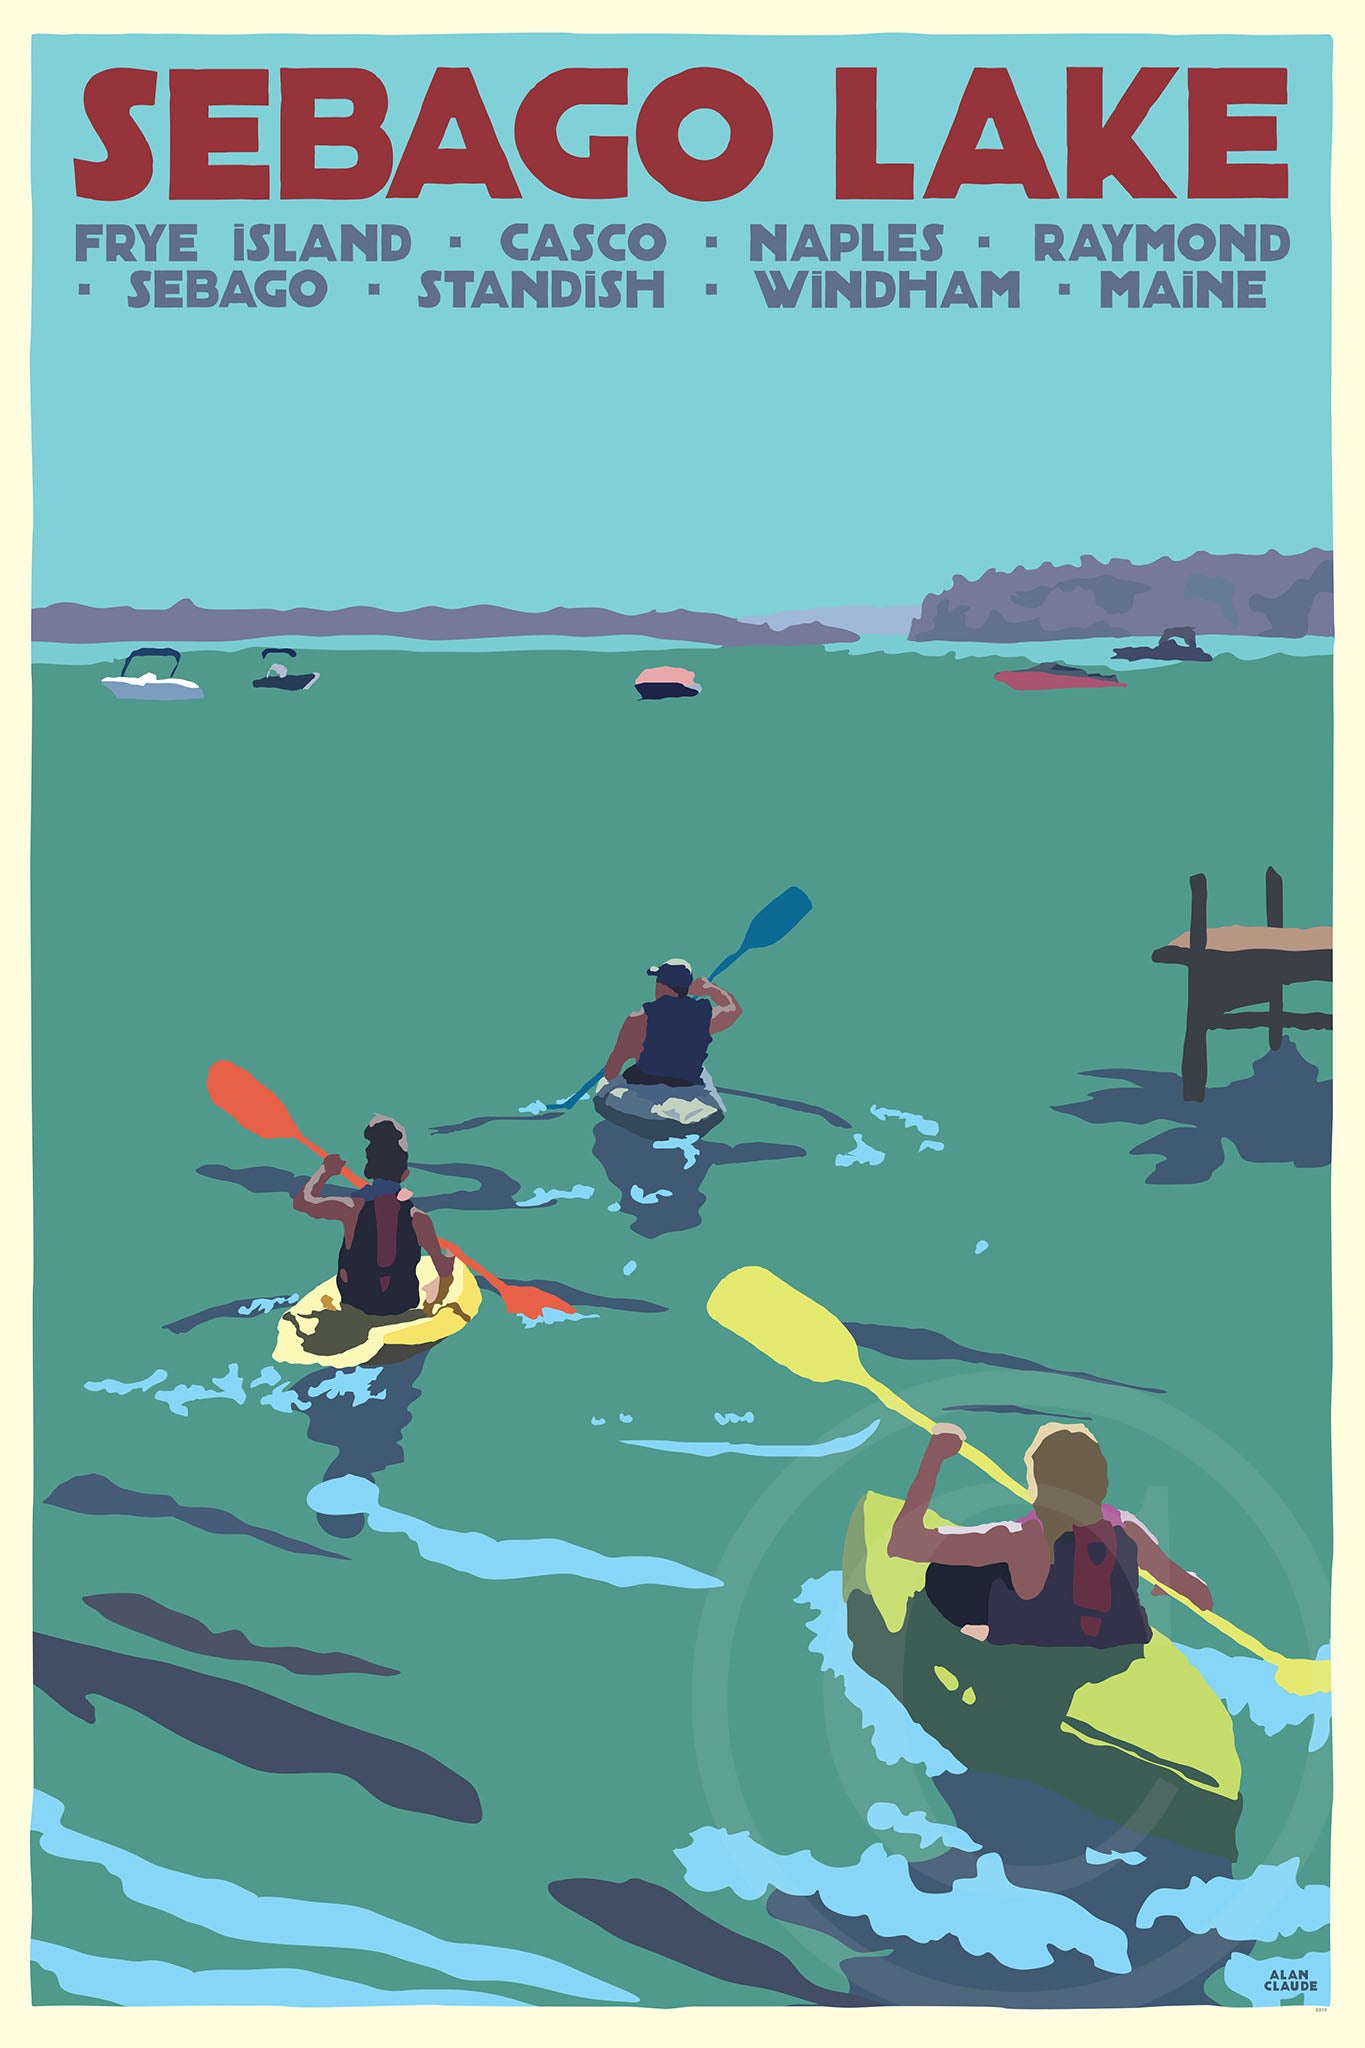 Sebago Lake kayakers Art Print 36"x 53" Travel Poster - Maine by Alan Claude